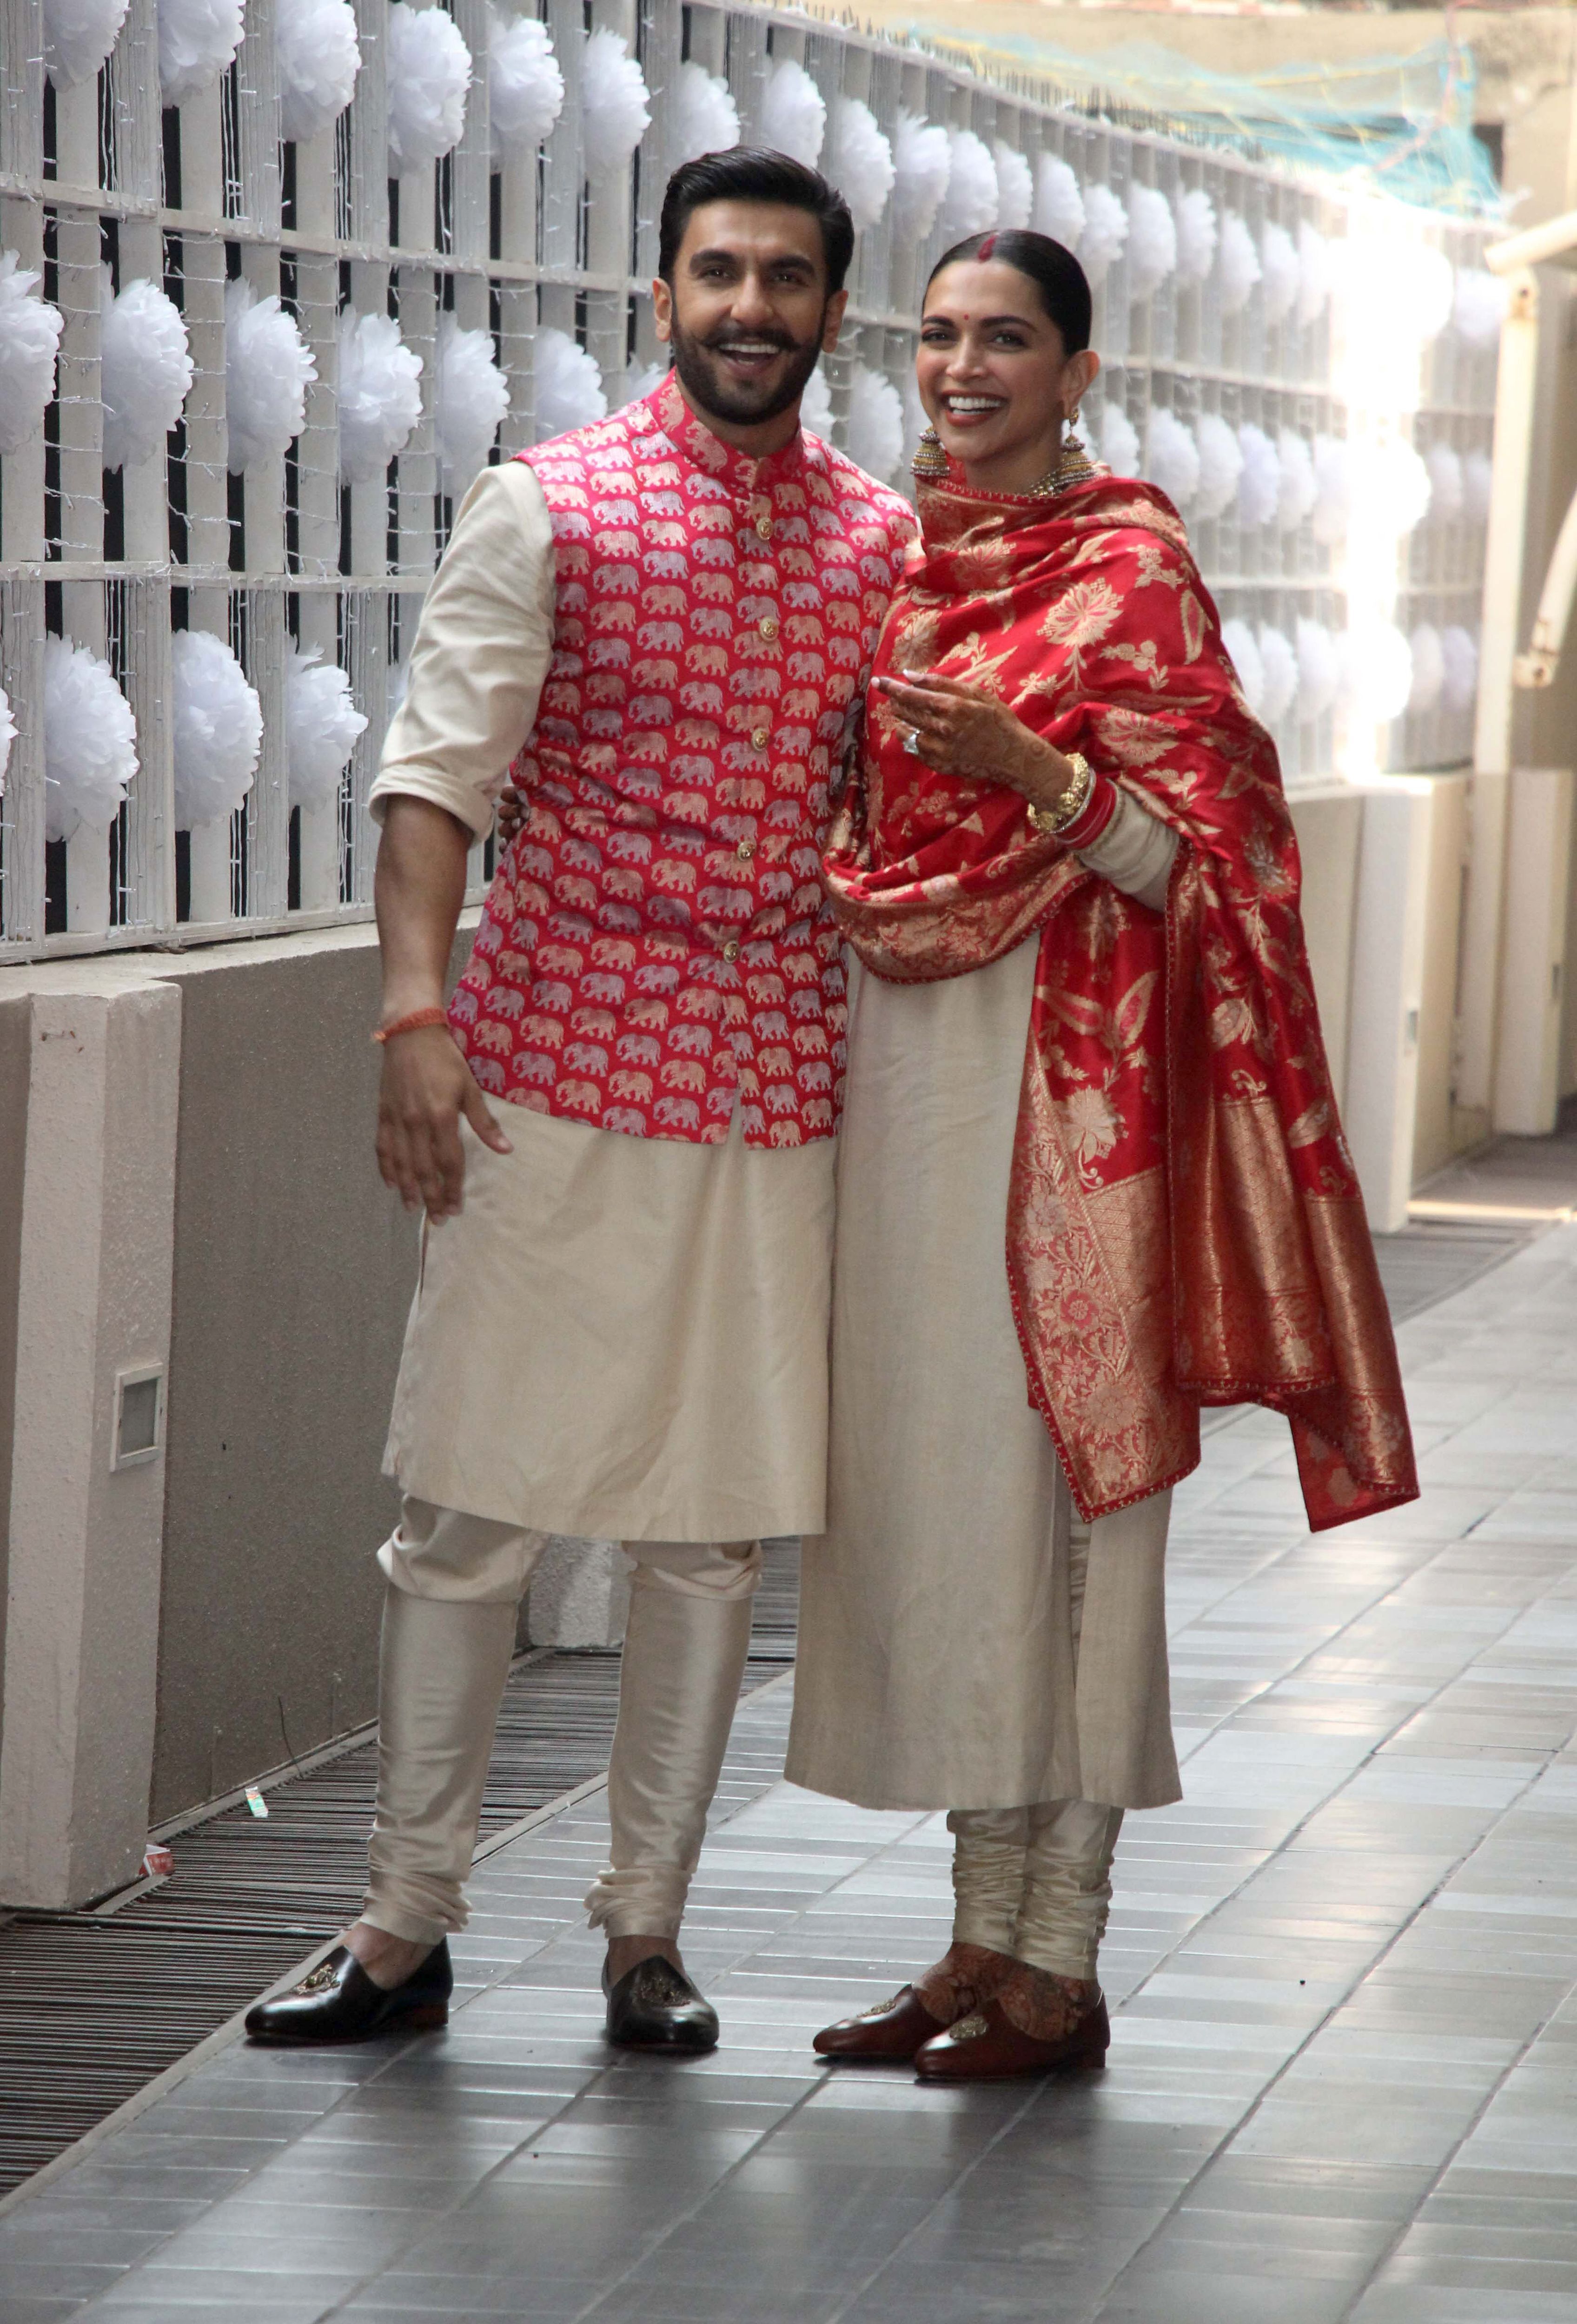 Pin by Deepika on Kids dress | Reception gown for bride, Reception gowns,  Indian wedding reception outfits